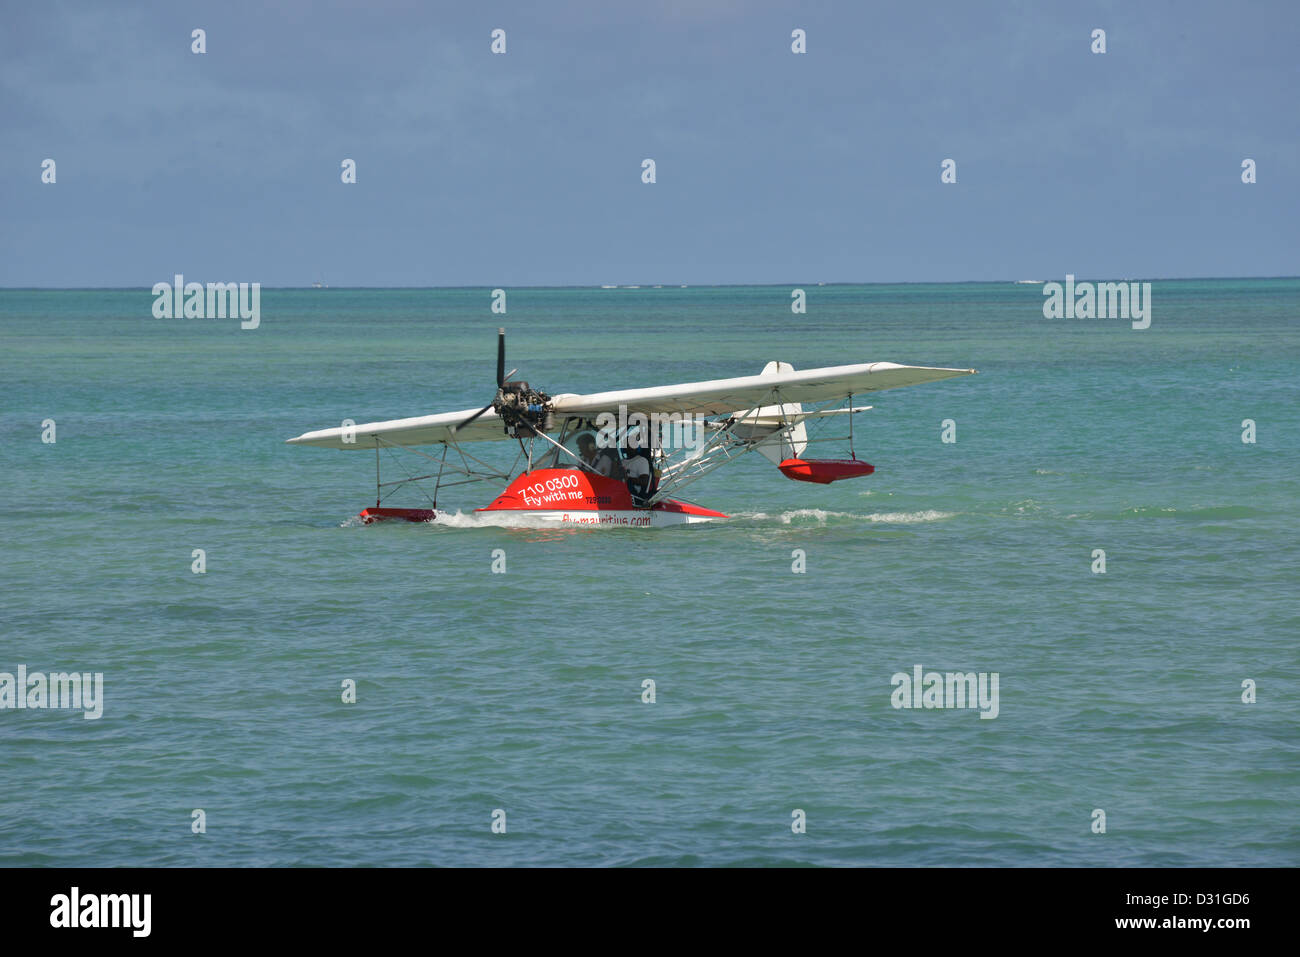 Rankar X Air Microlite sea plane Stock Photo